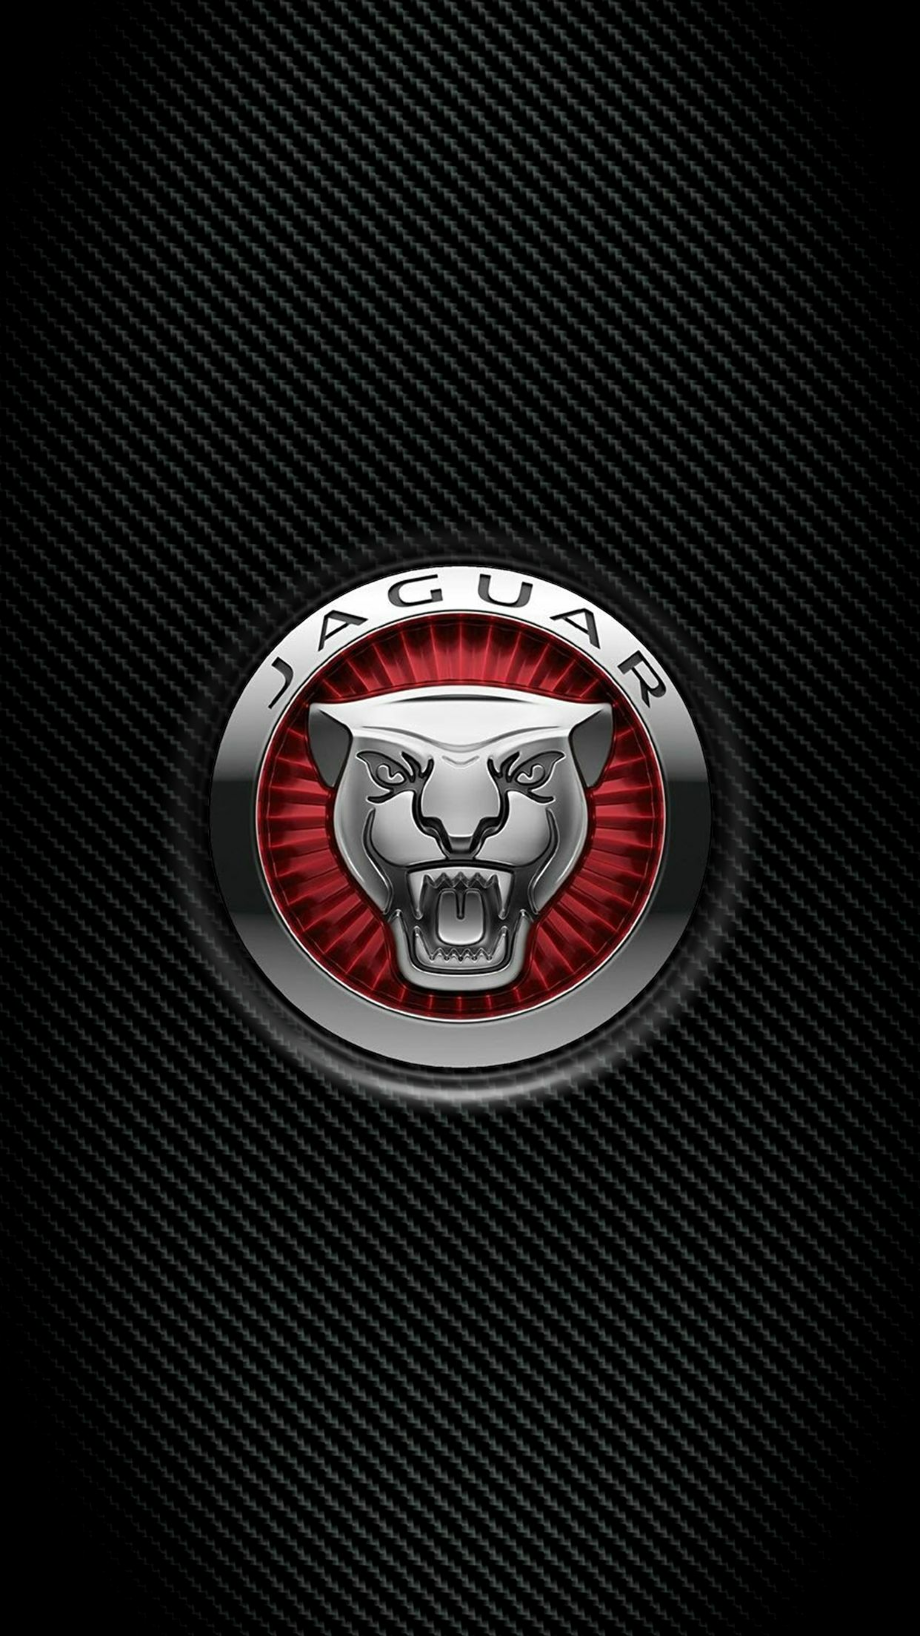 jaguar logo iphone